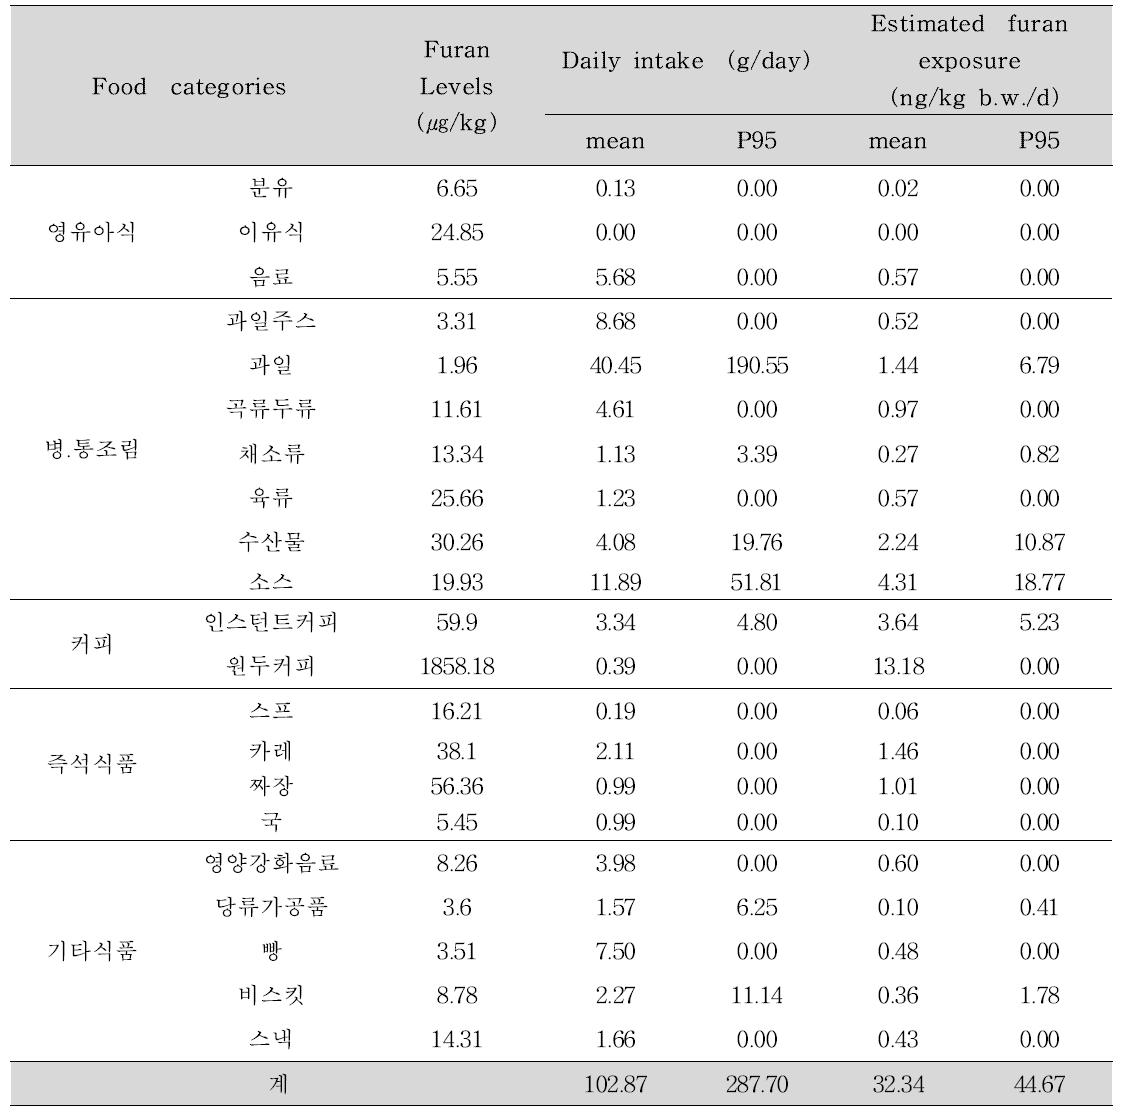 Daily intake and estimated furan exposure of foods